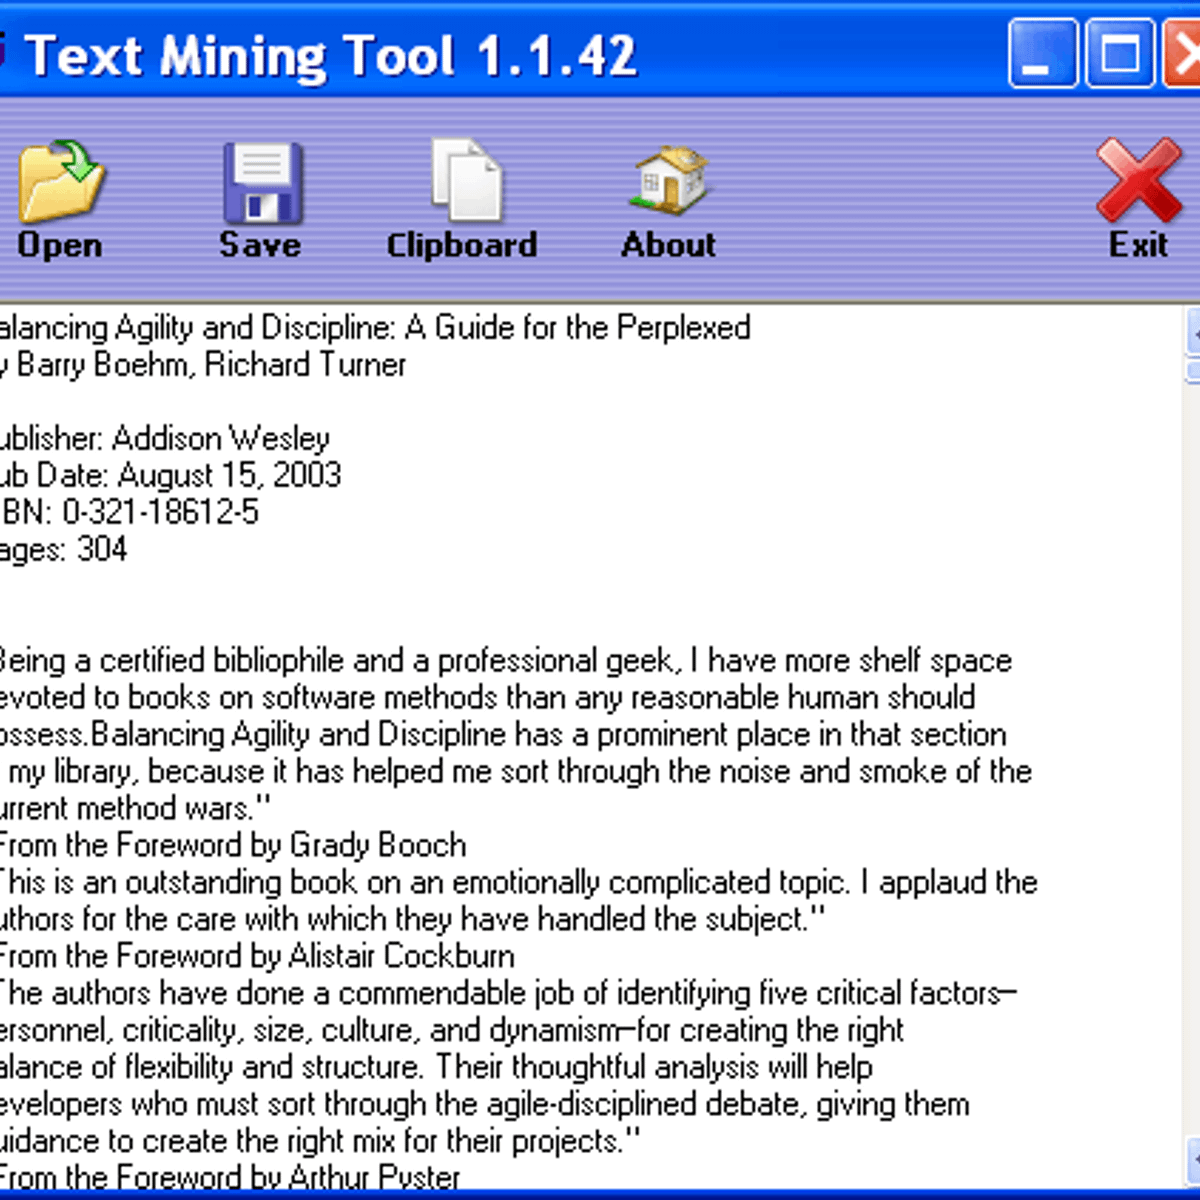 Mining tool